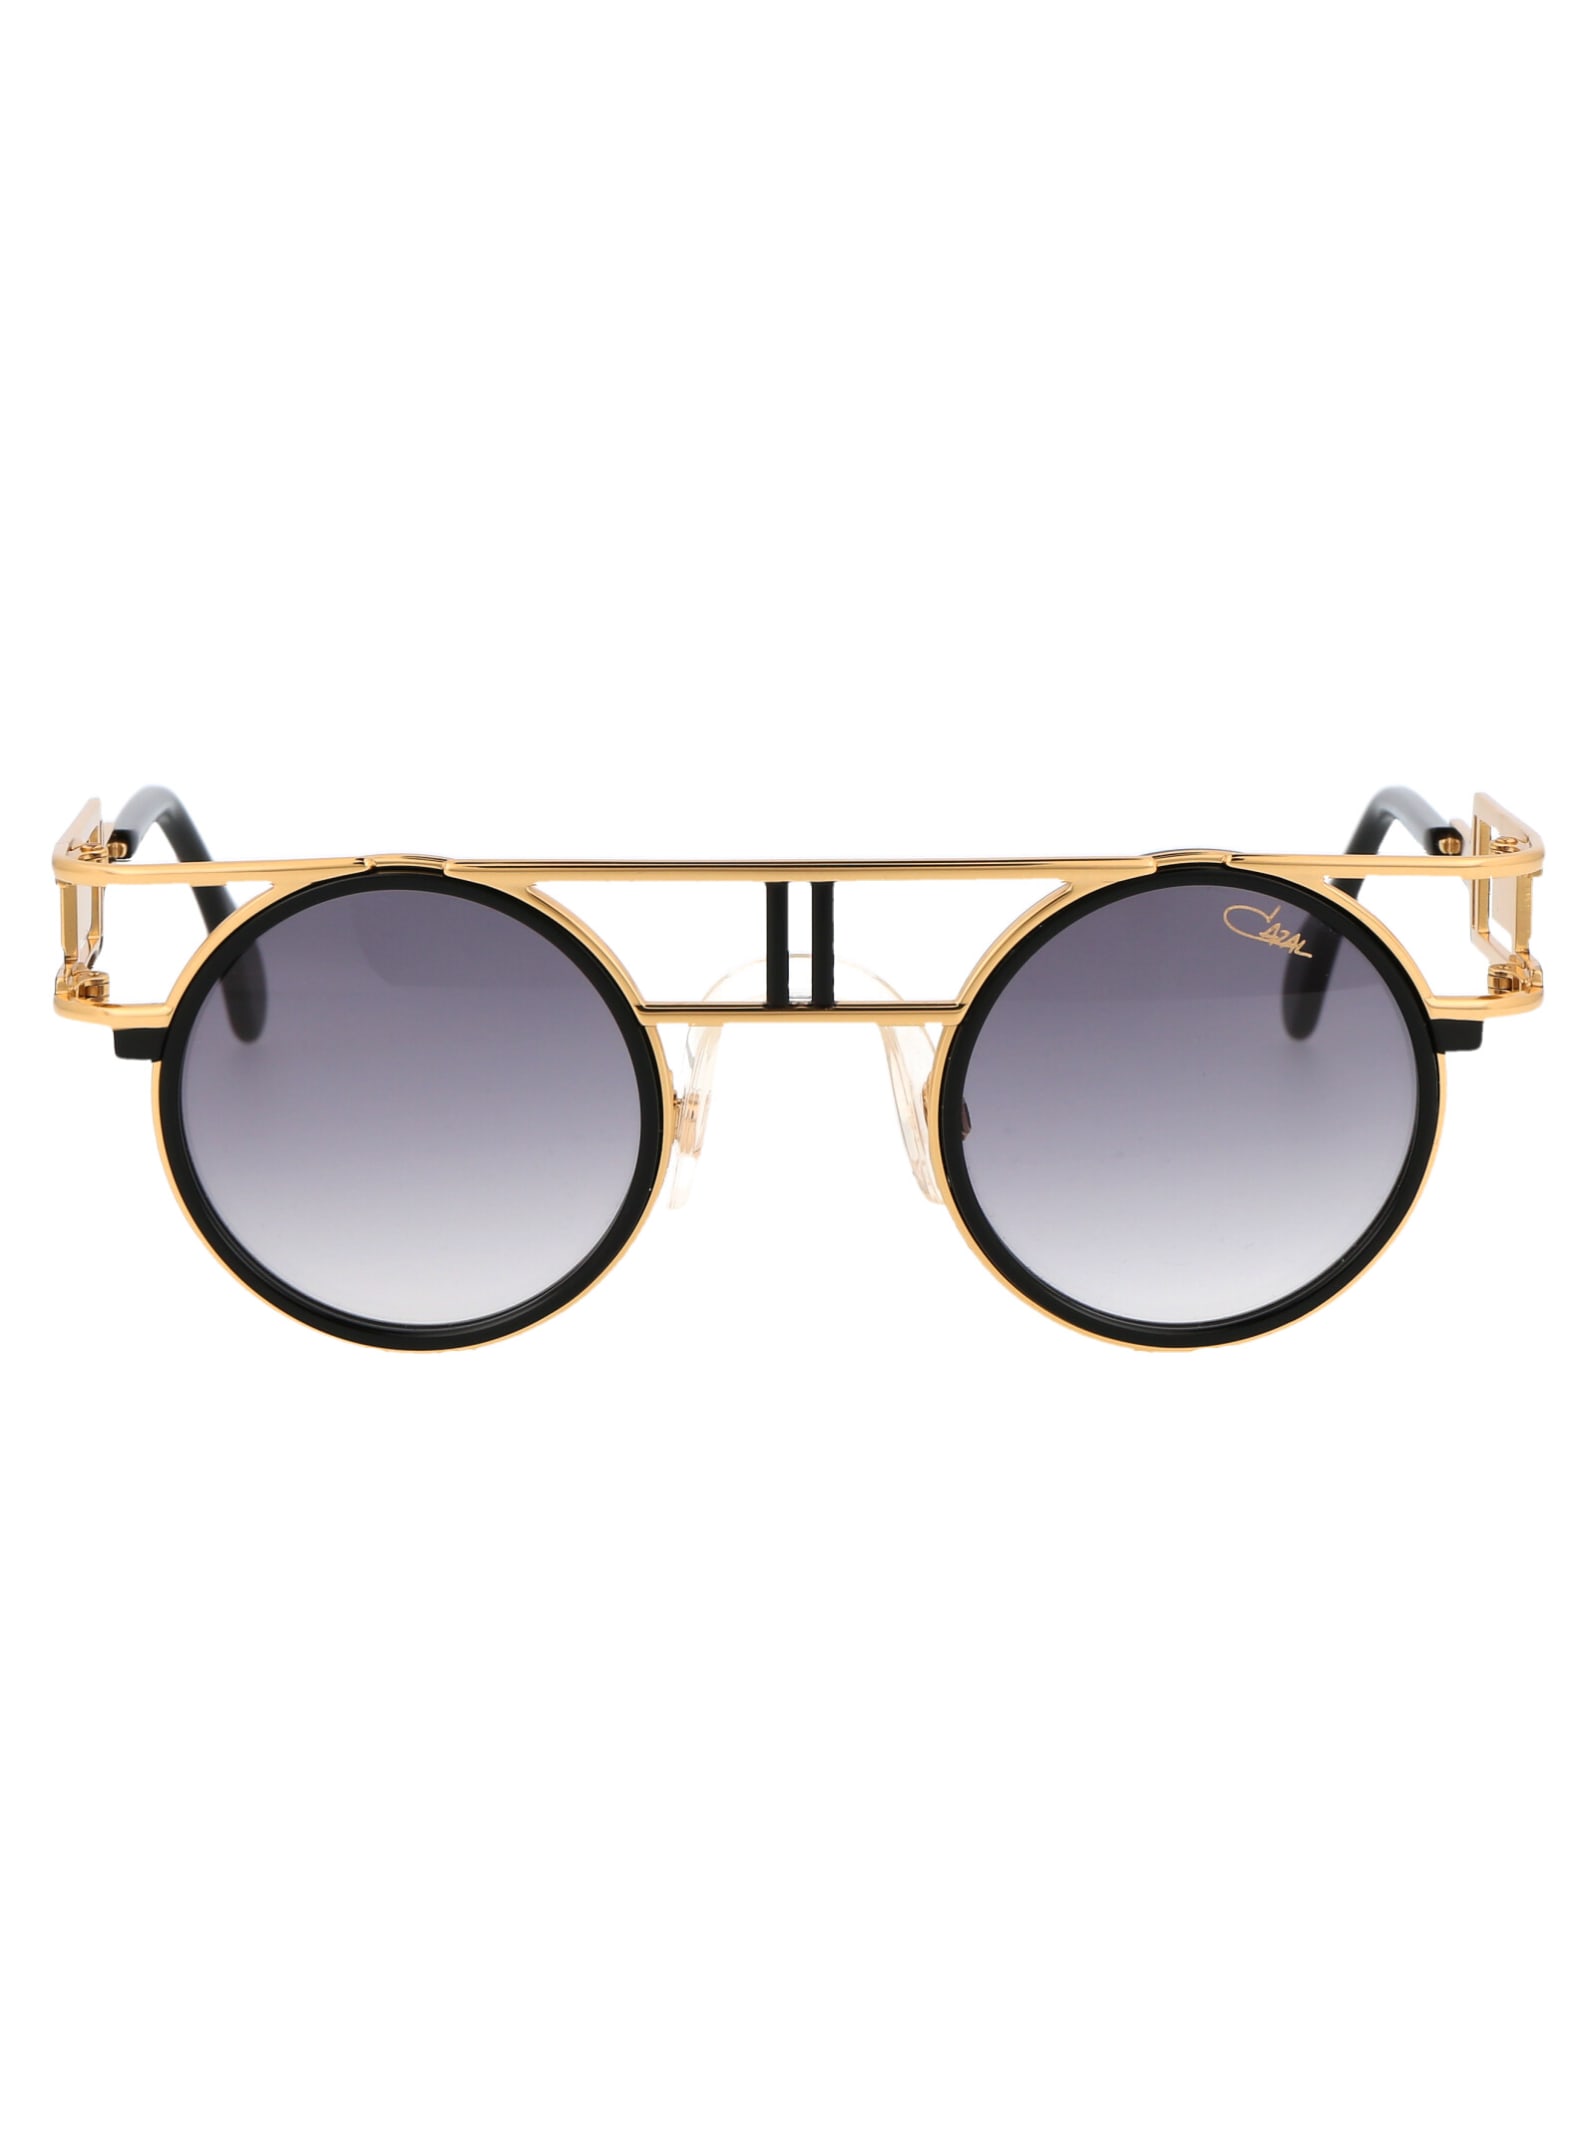 Cazal Mod. 668/3 Sunglasses